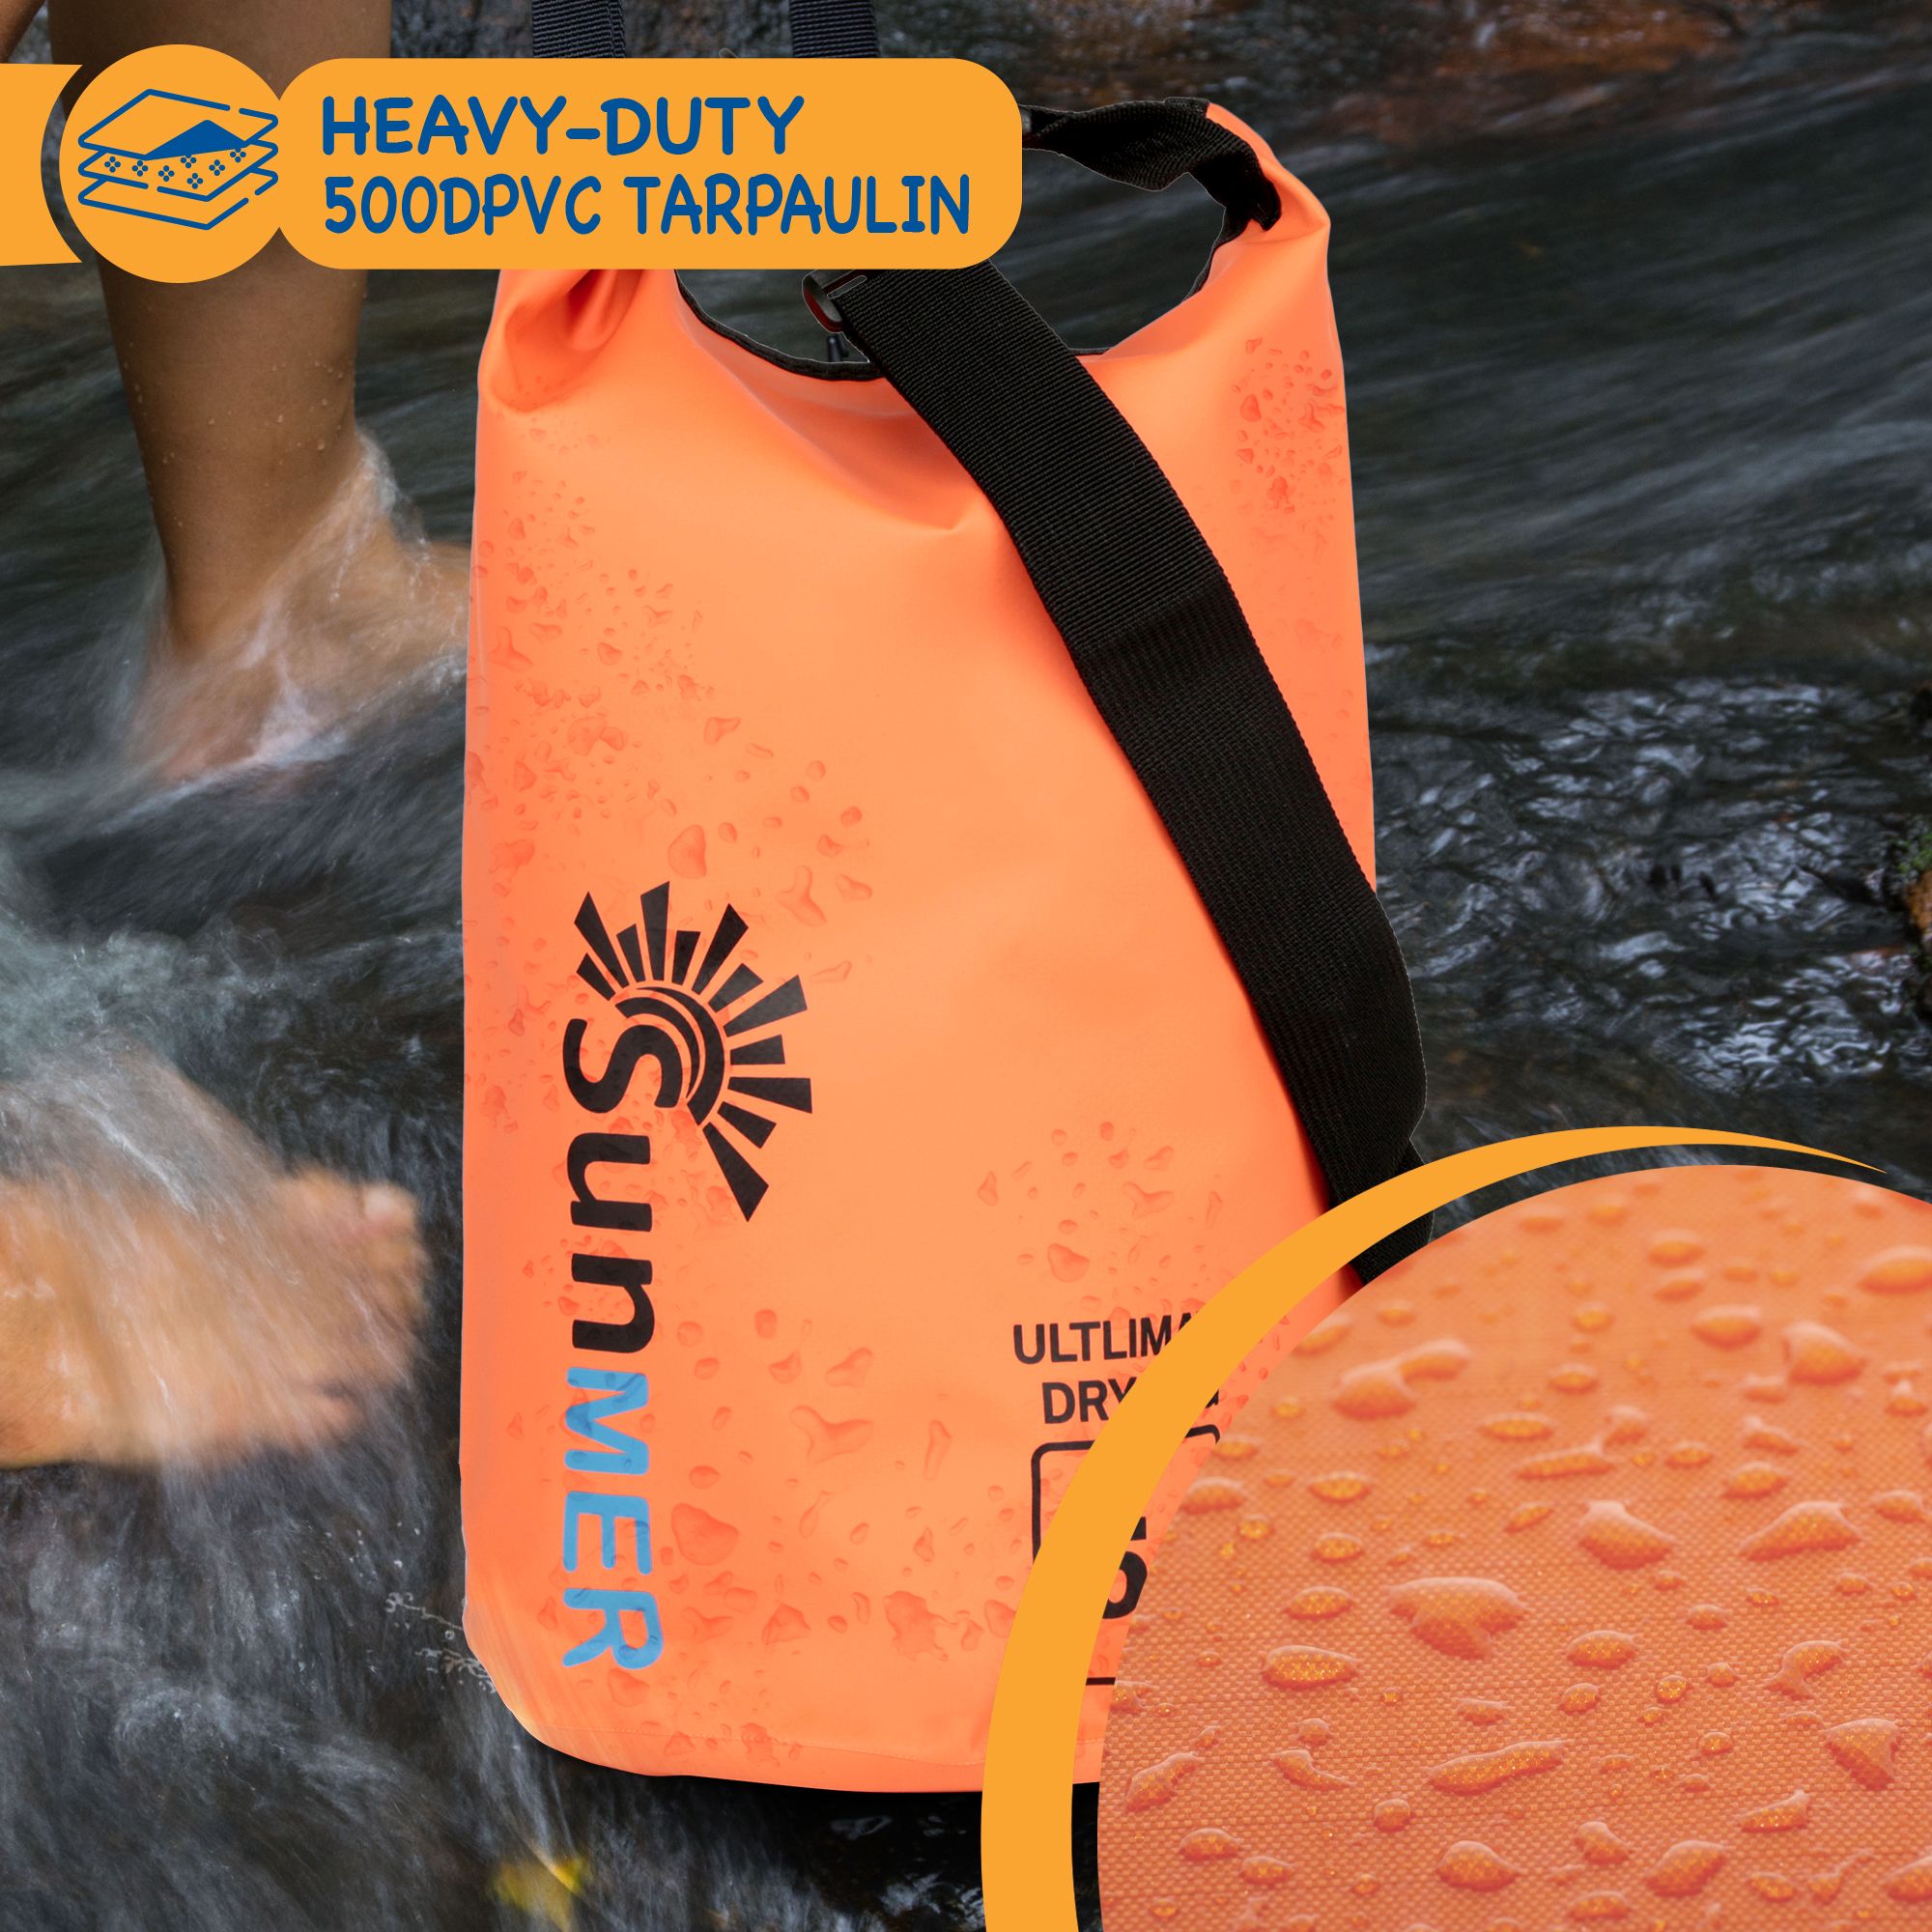 SUNMER 20L Dry Bag With Waterproof Phone Case - Orange